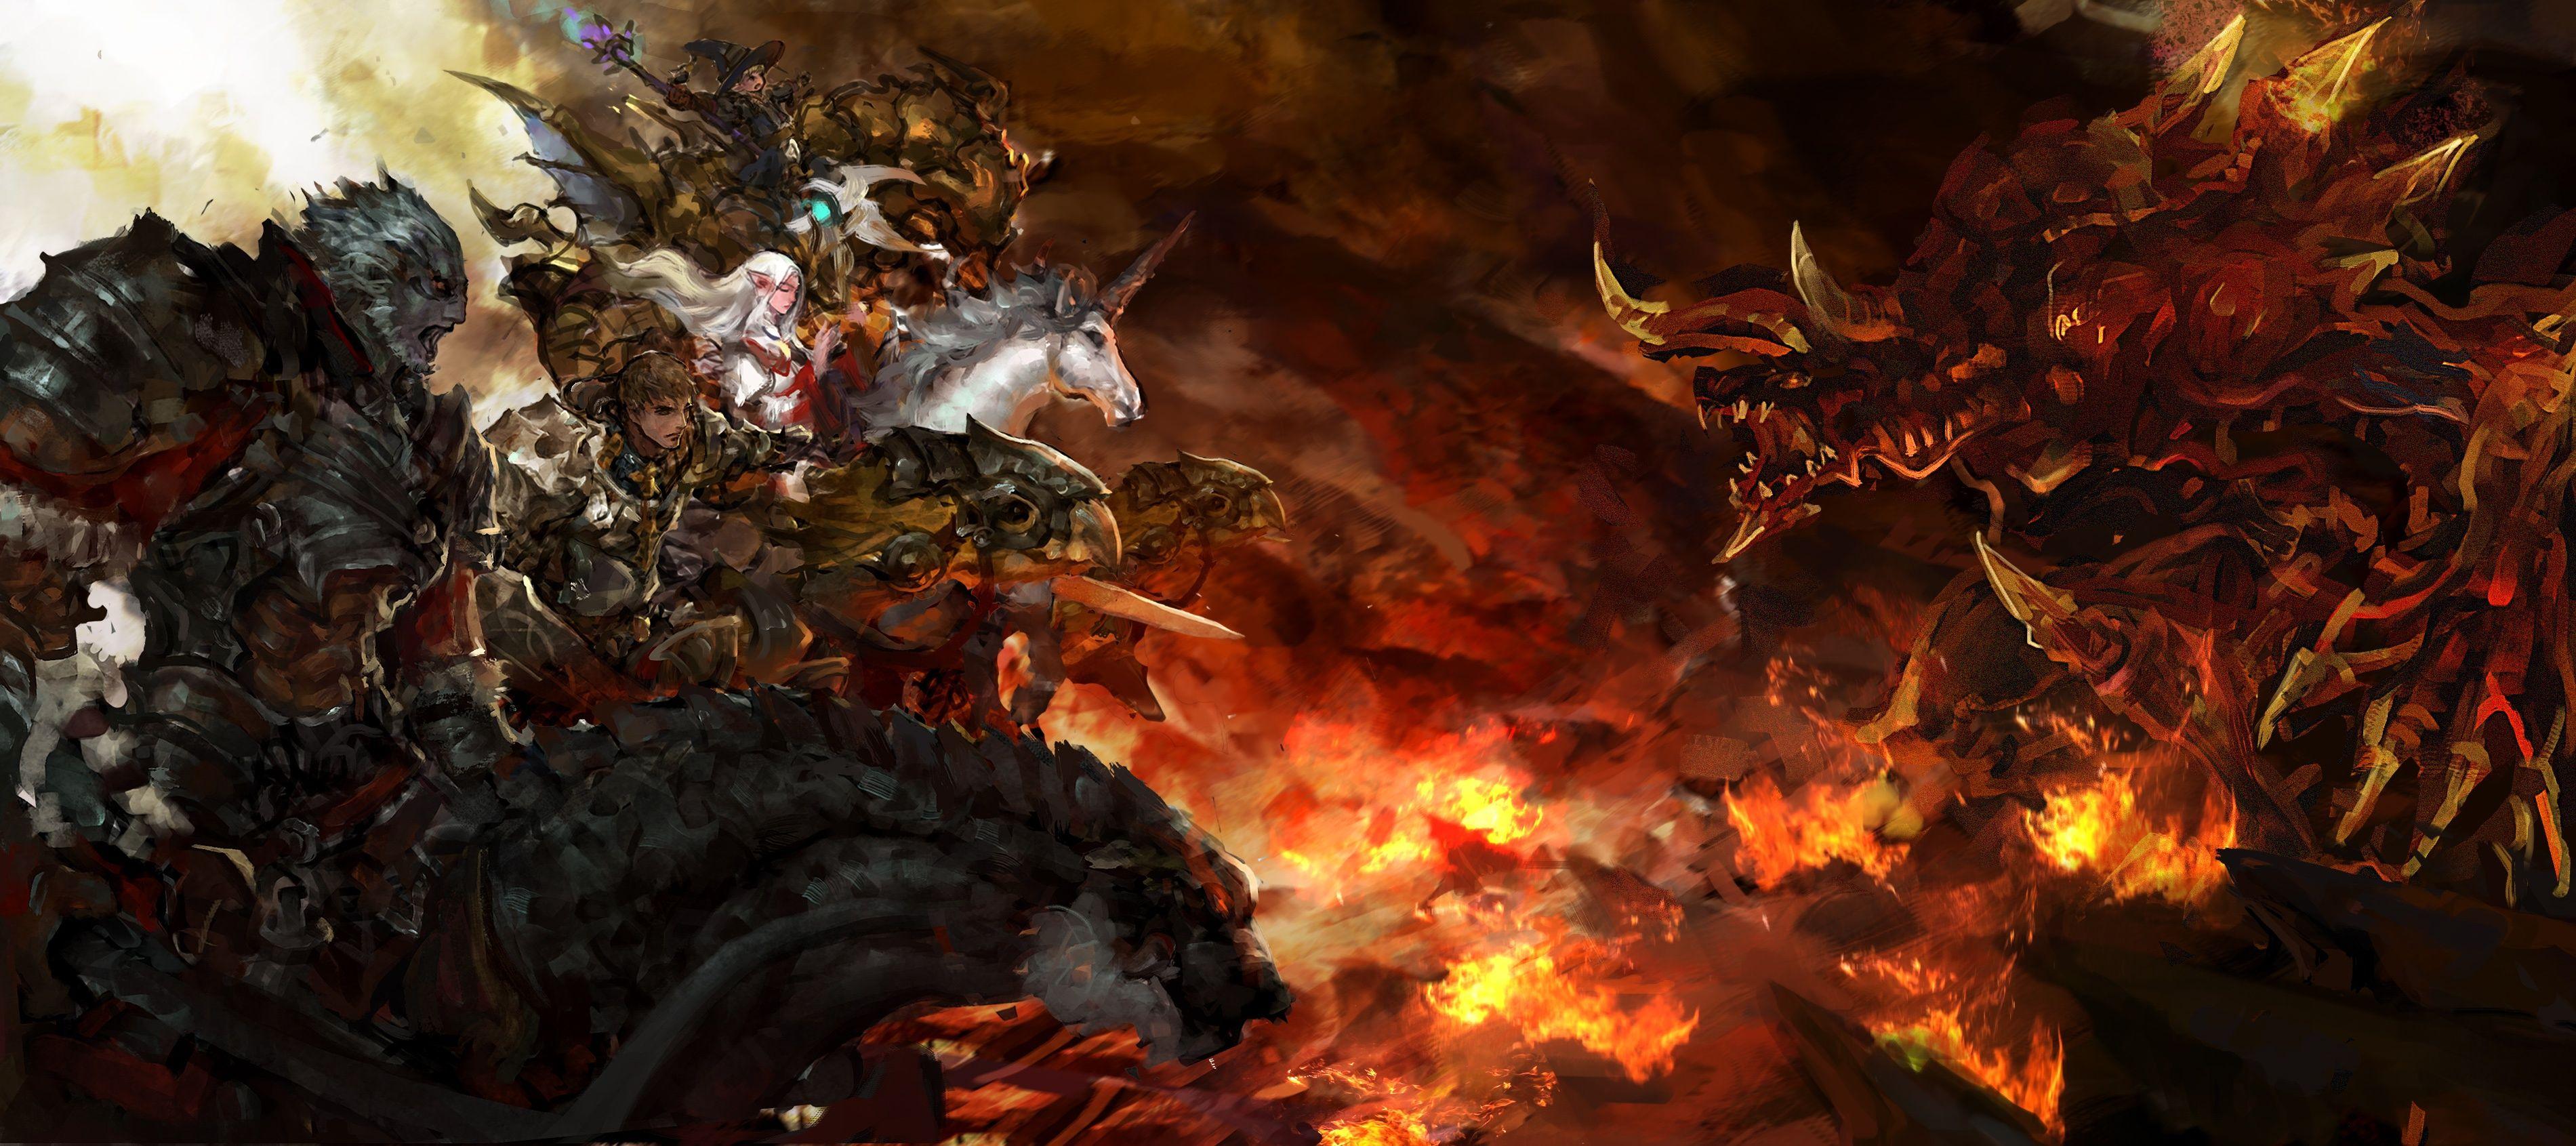 Wallpaper wallpaper from Final Fantasy XIV A Realm Reborn. Final